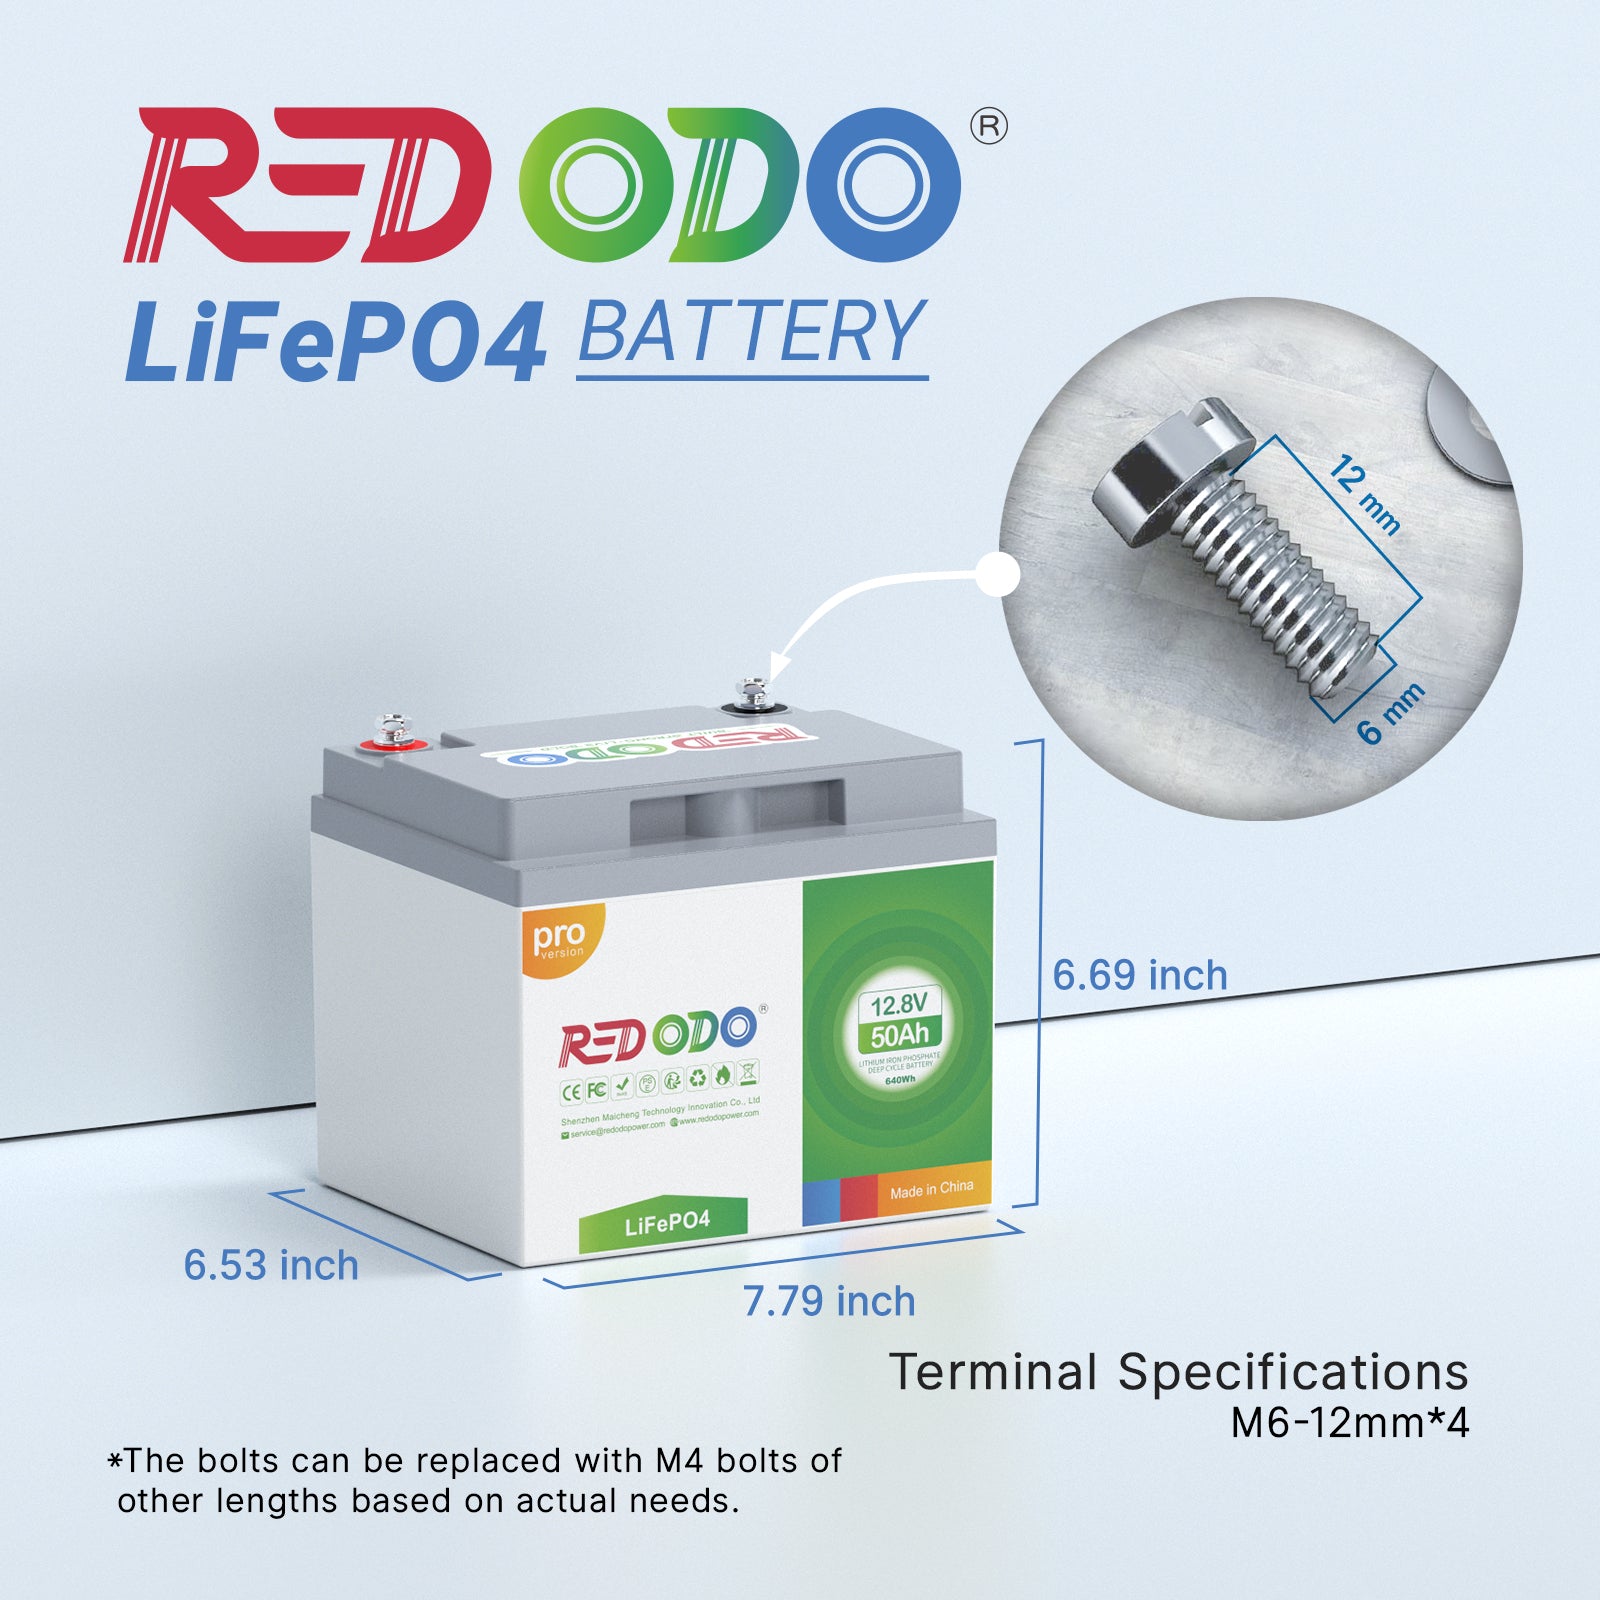 Redodo 12V 50Ah pro LiFePO4 Battery